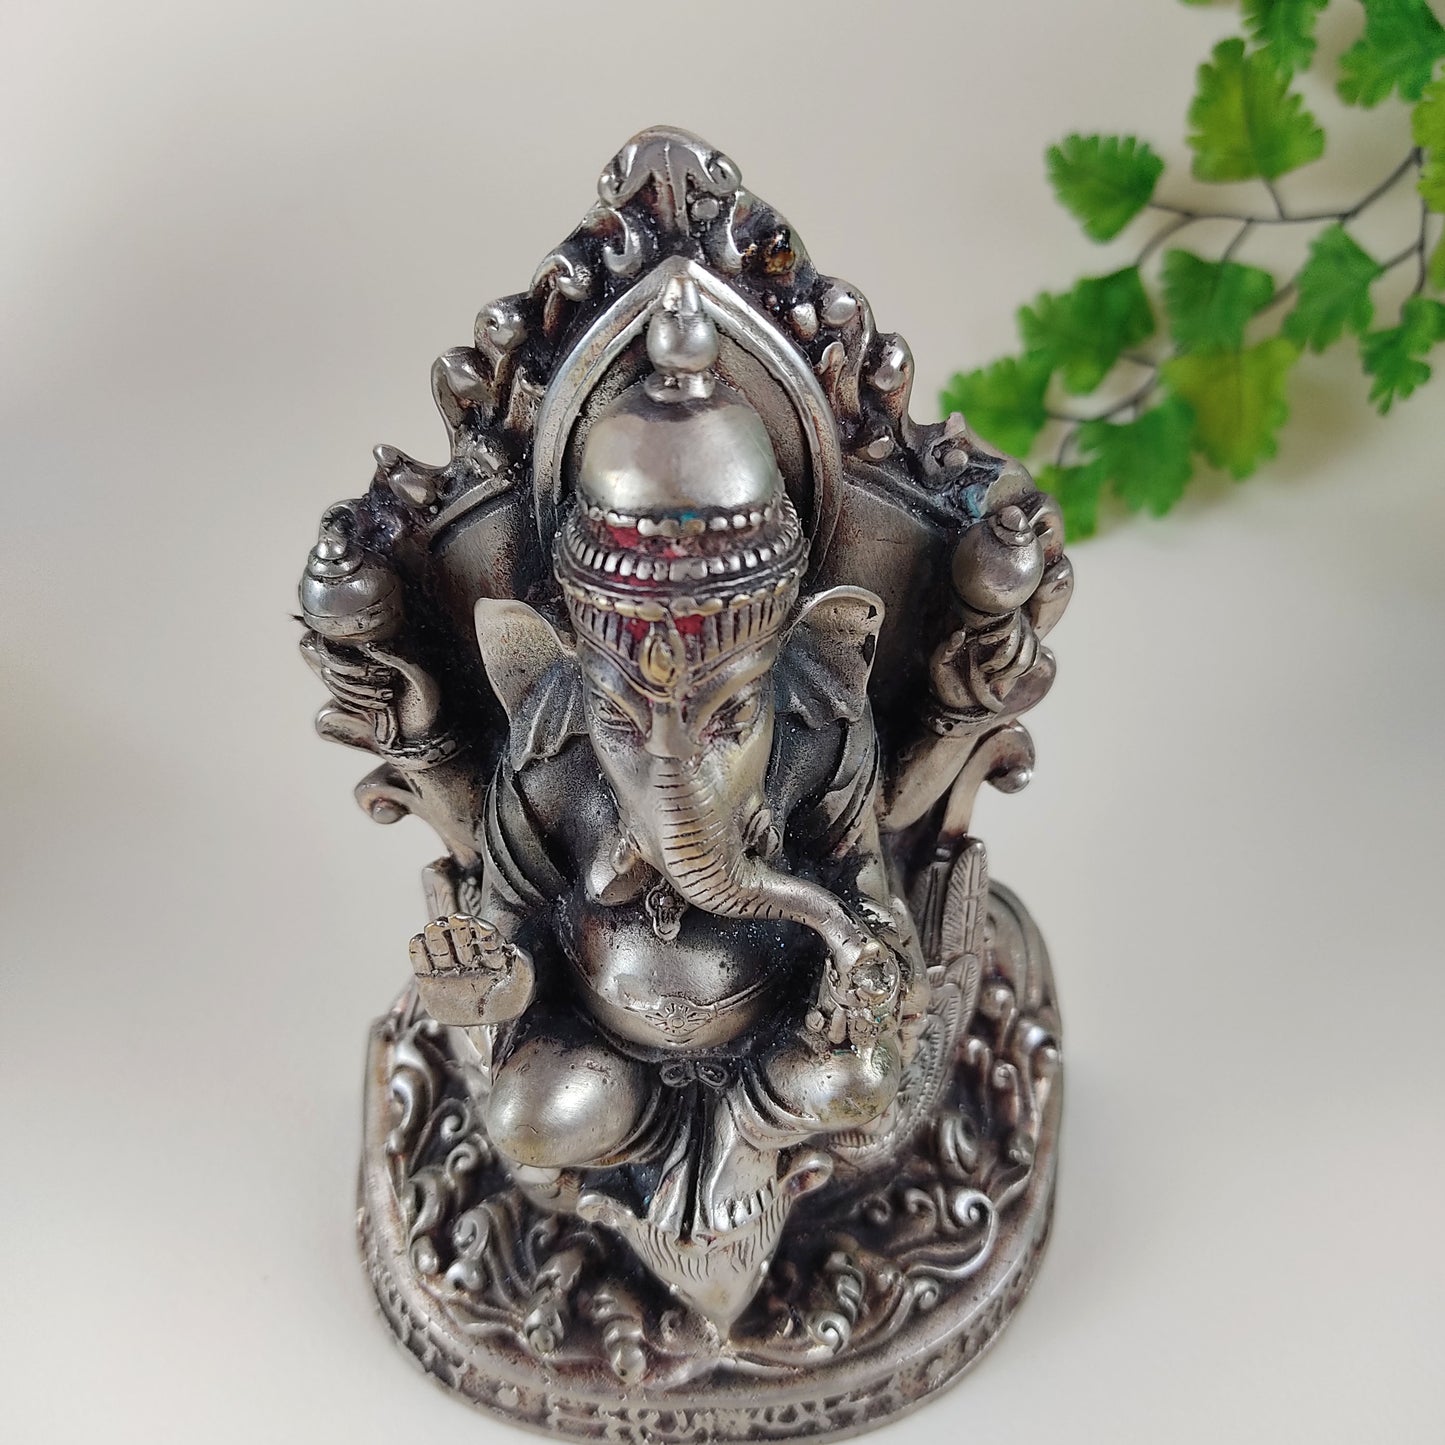 Vintage Ganesh Ji India Elephant God Altar Statue Handmade White Brass 6.75"